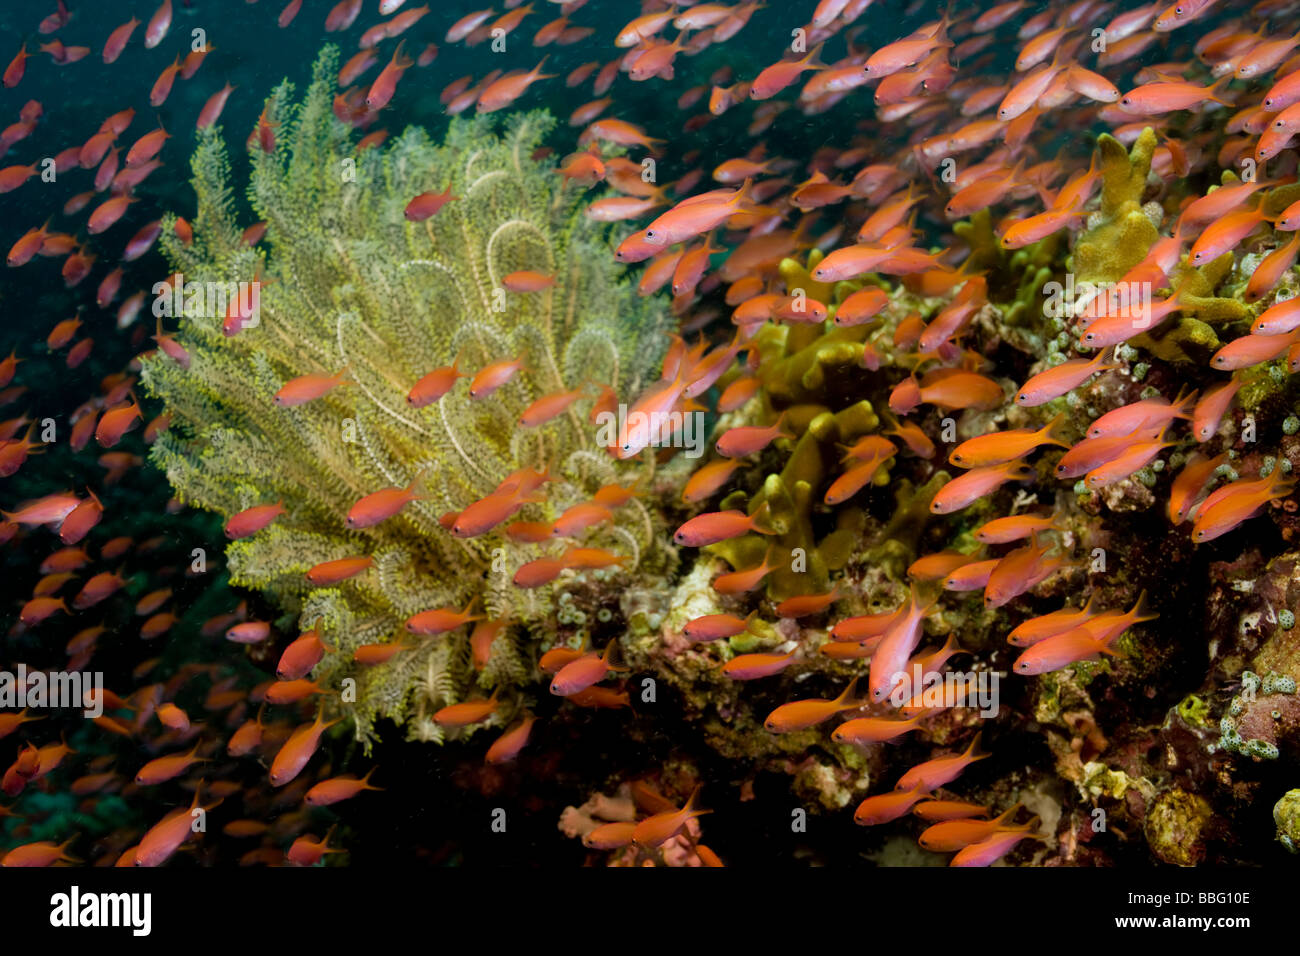 Reef scene with schooling fish. Stock Photo